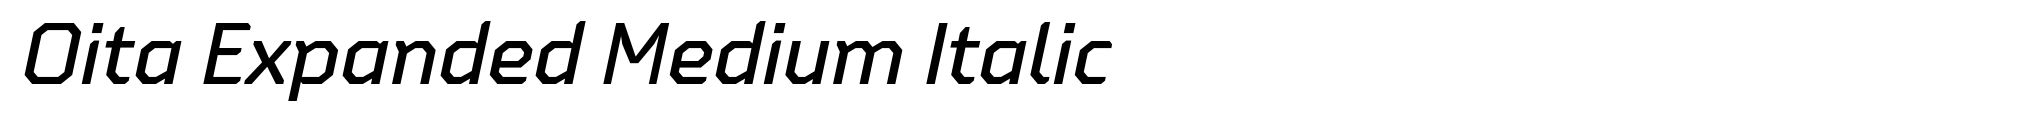 Oita Expanded Medium Italic image